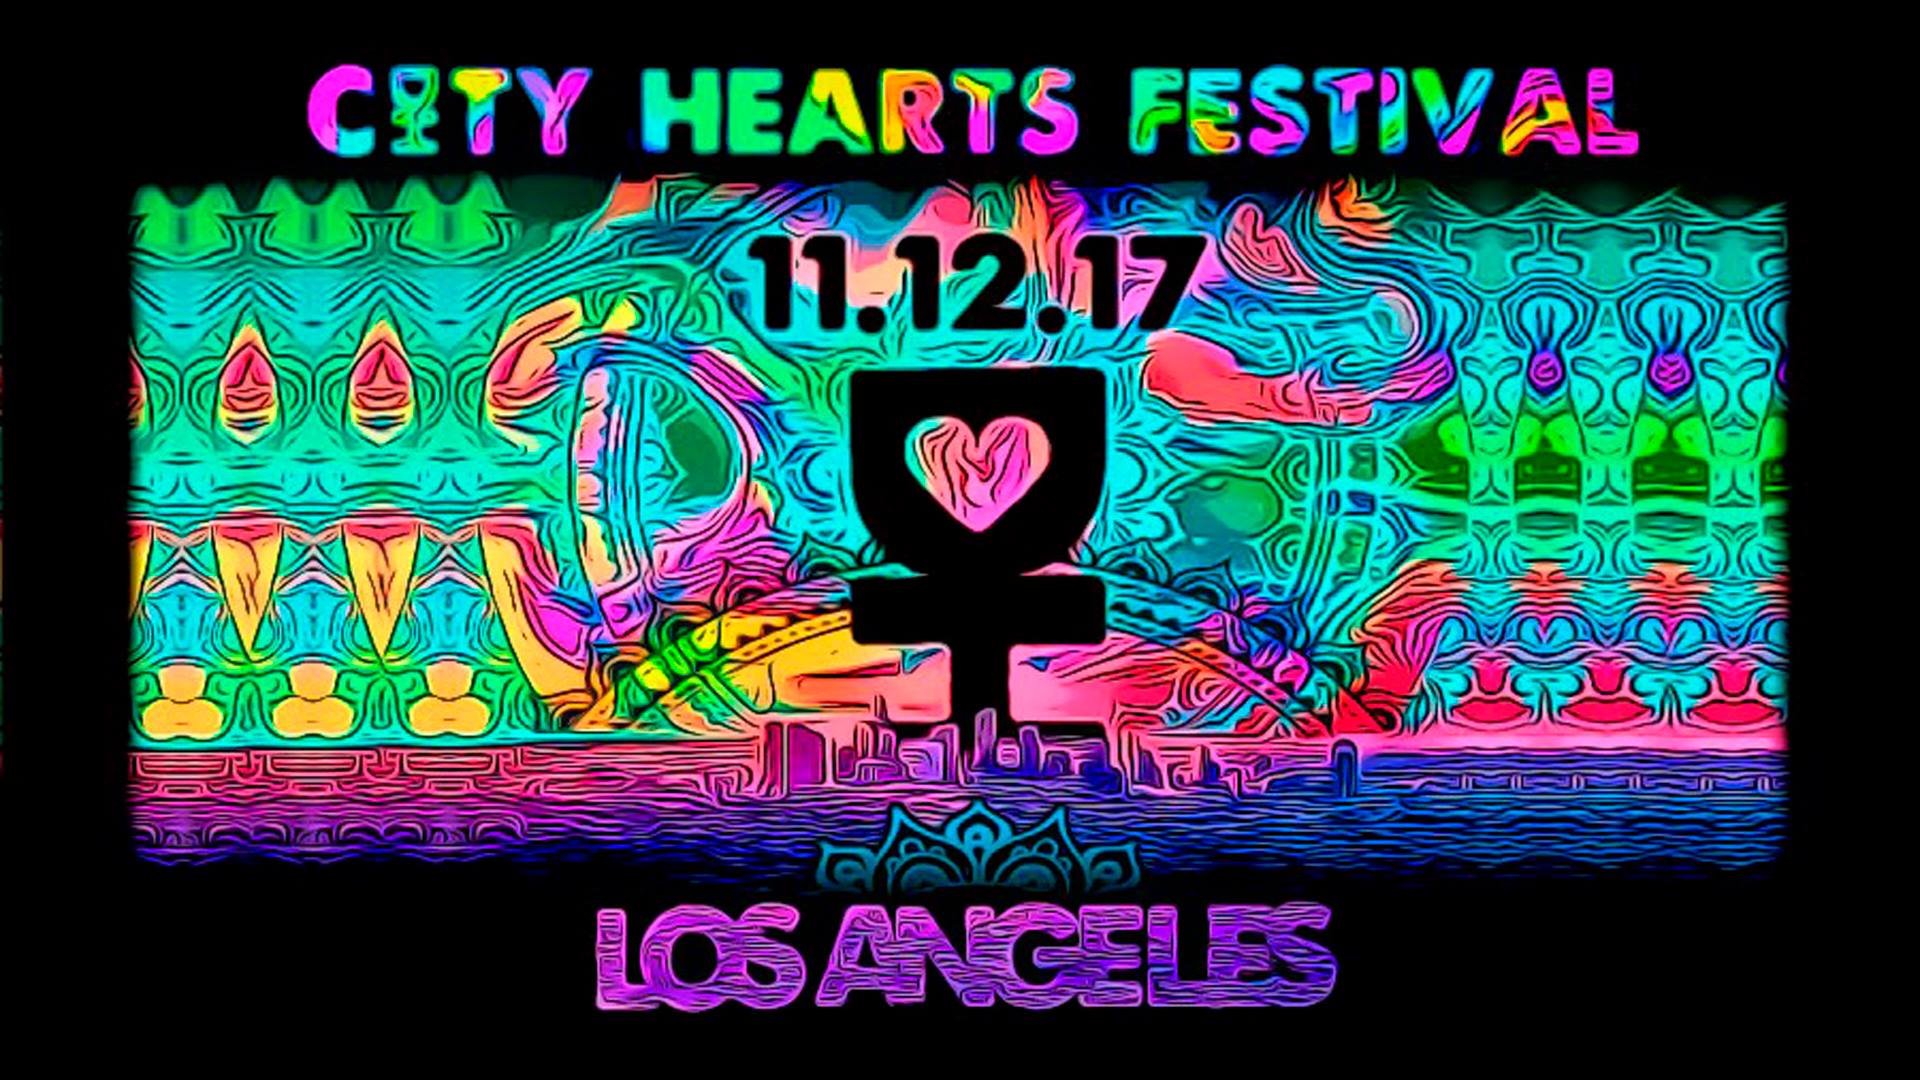 Desert Hearts Presents: City Hearts Festival